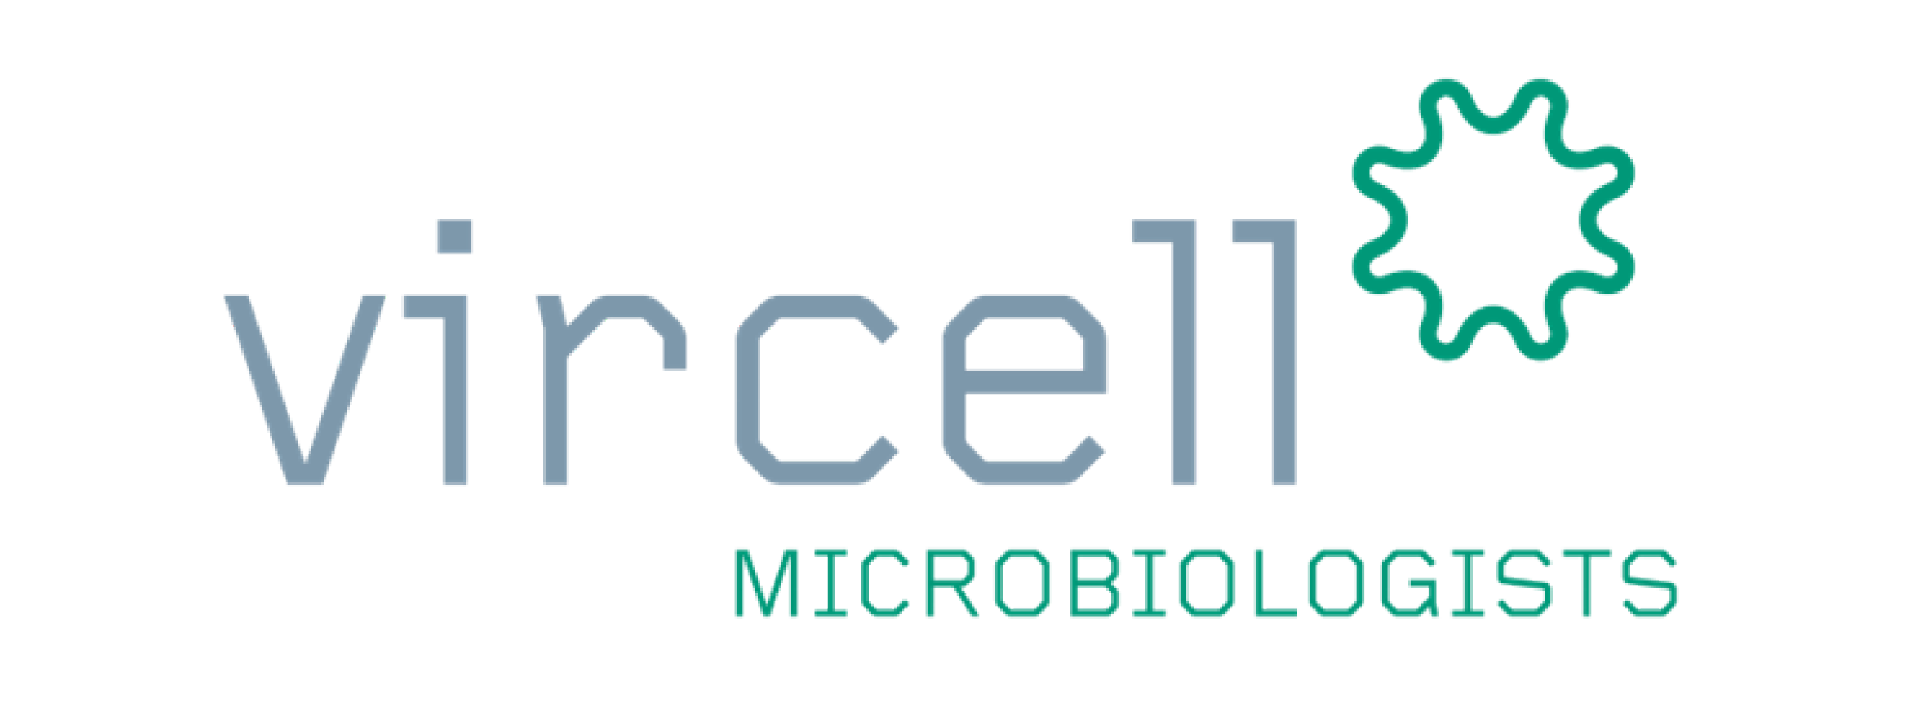 Vircell Mocrobiologists